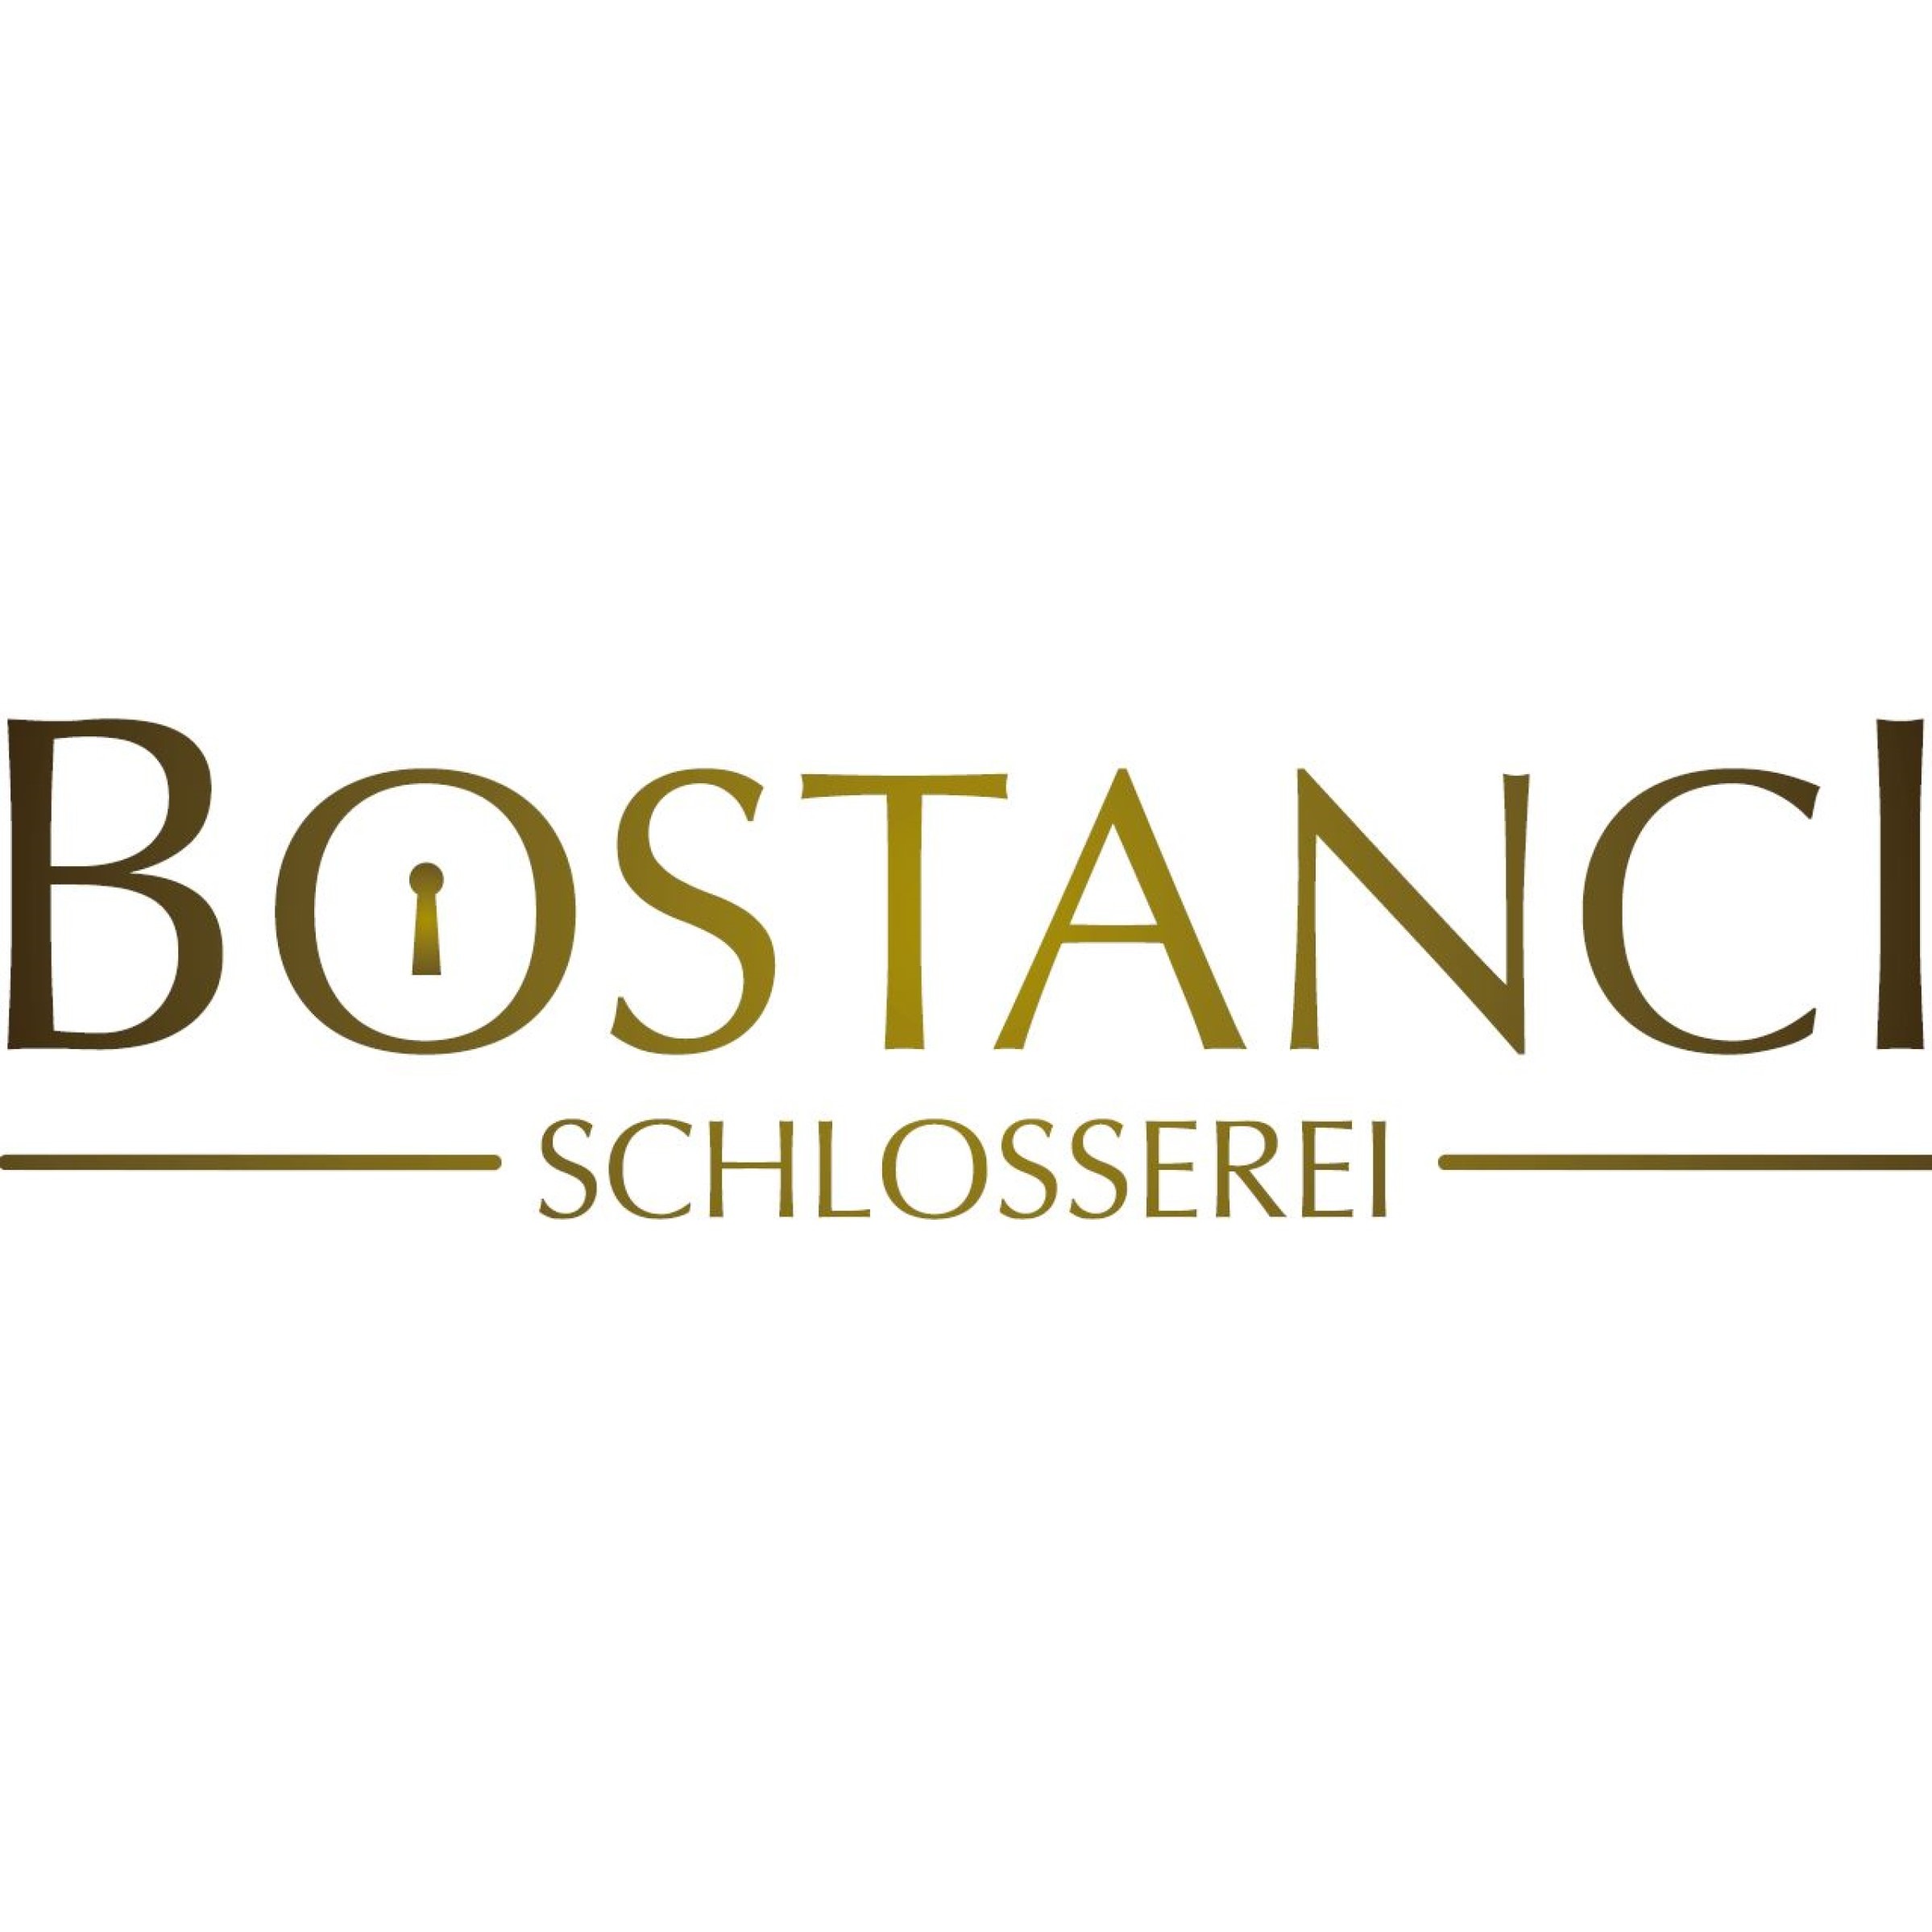 Bostanci Schlosserei - Inh. Mst. Ali Bostanci